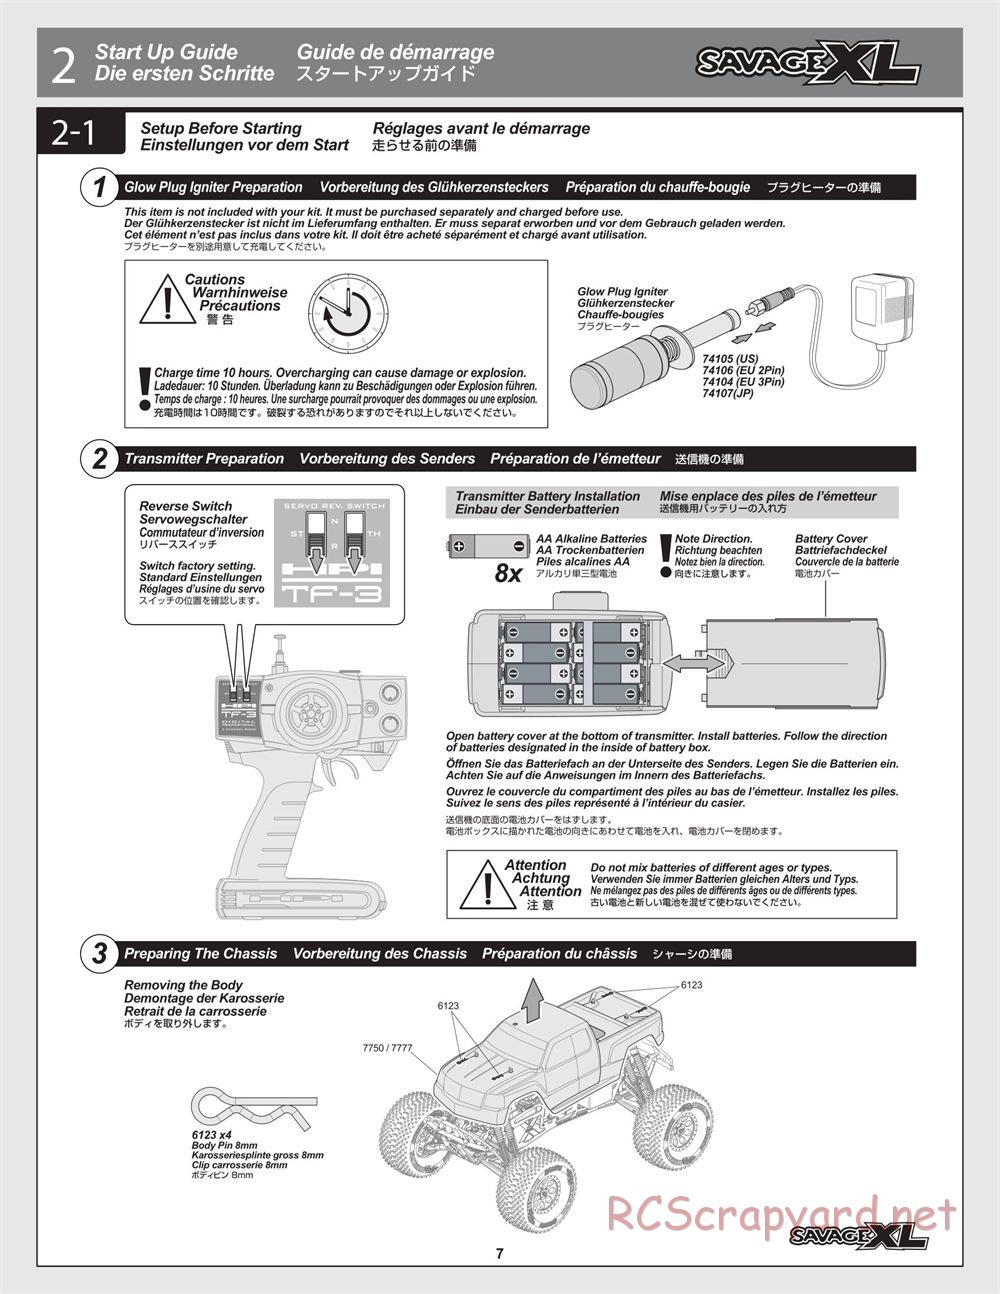 HPI - Savage XL 5.9 - Manual - Page 7